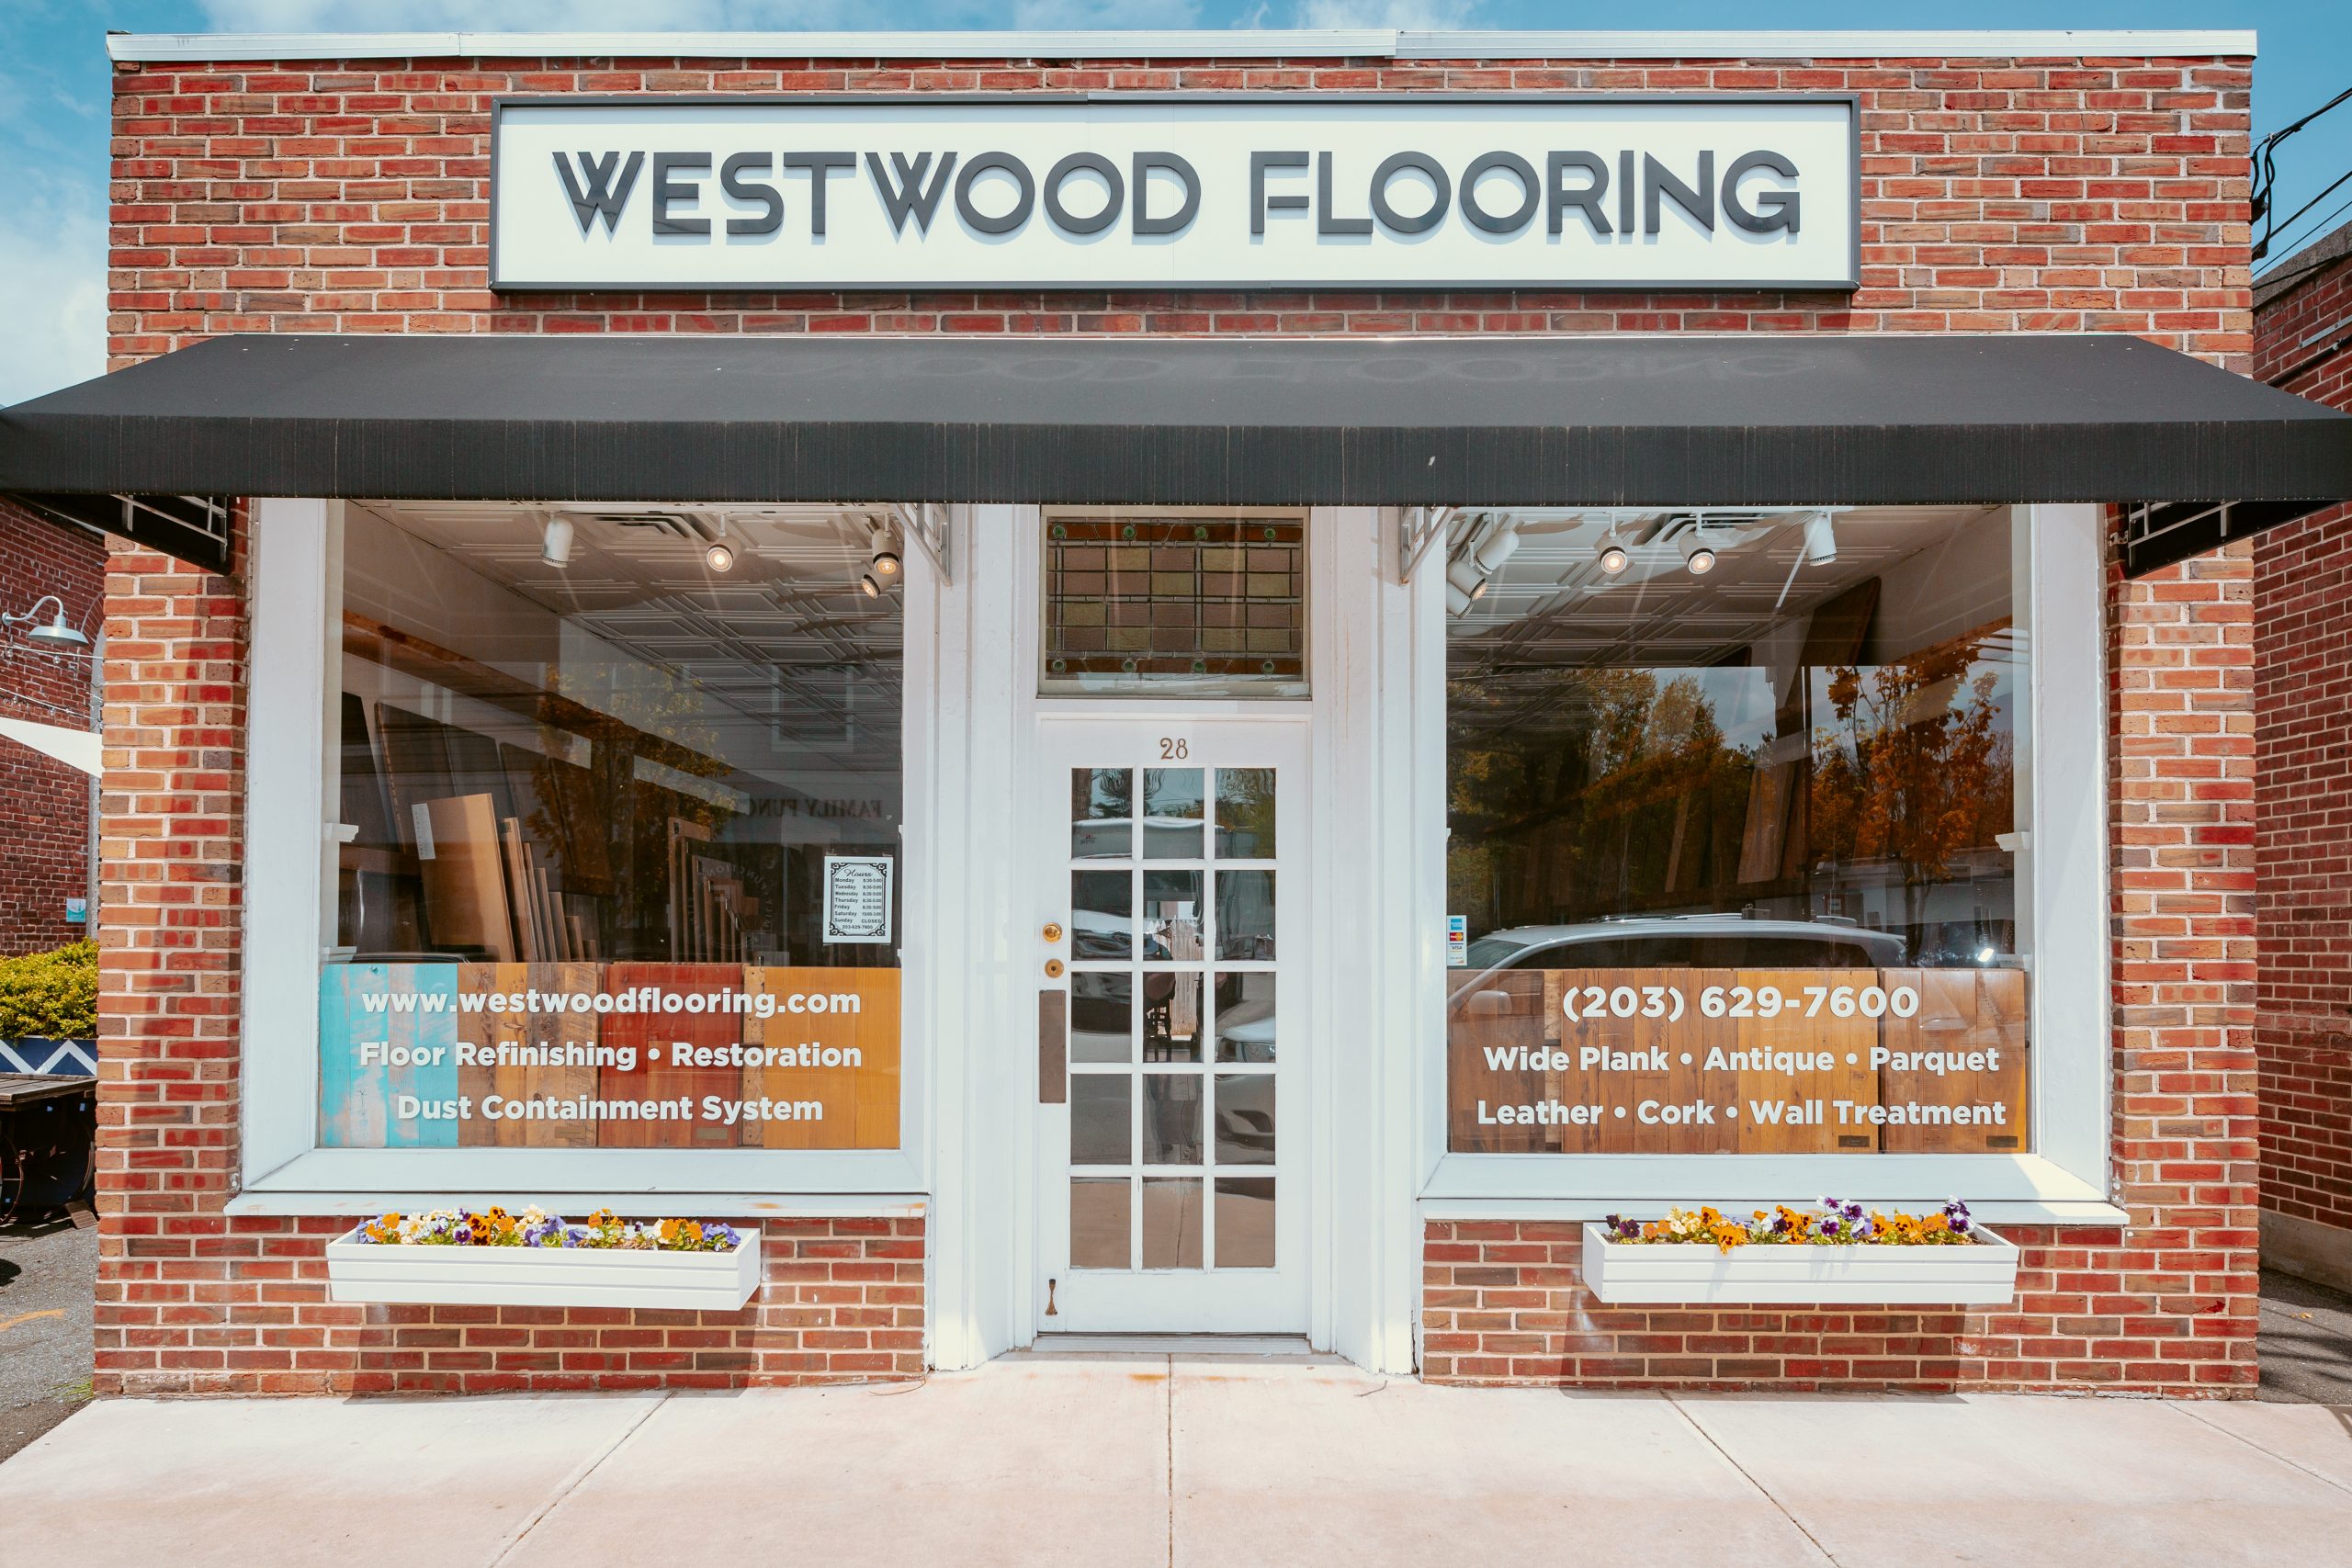 Westwood Flooring in Greenwich, CT